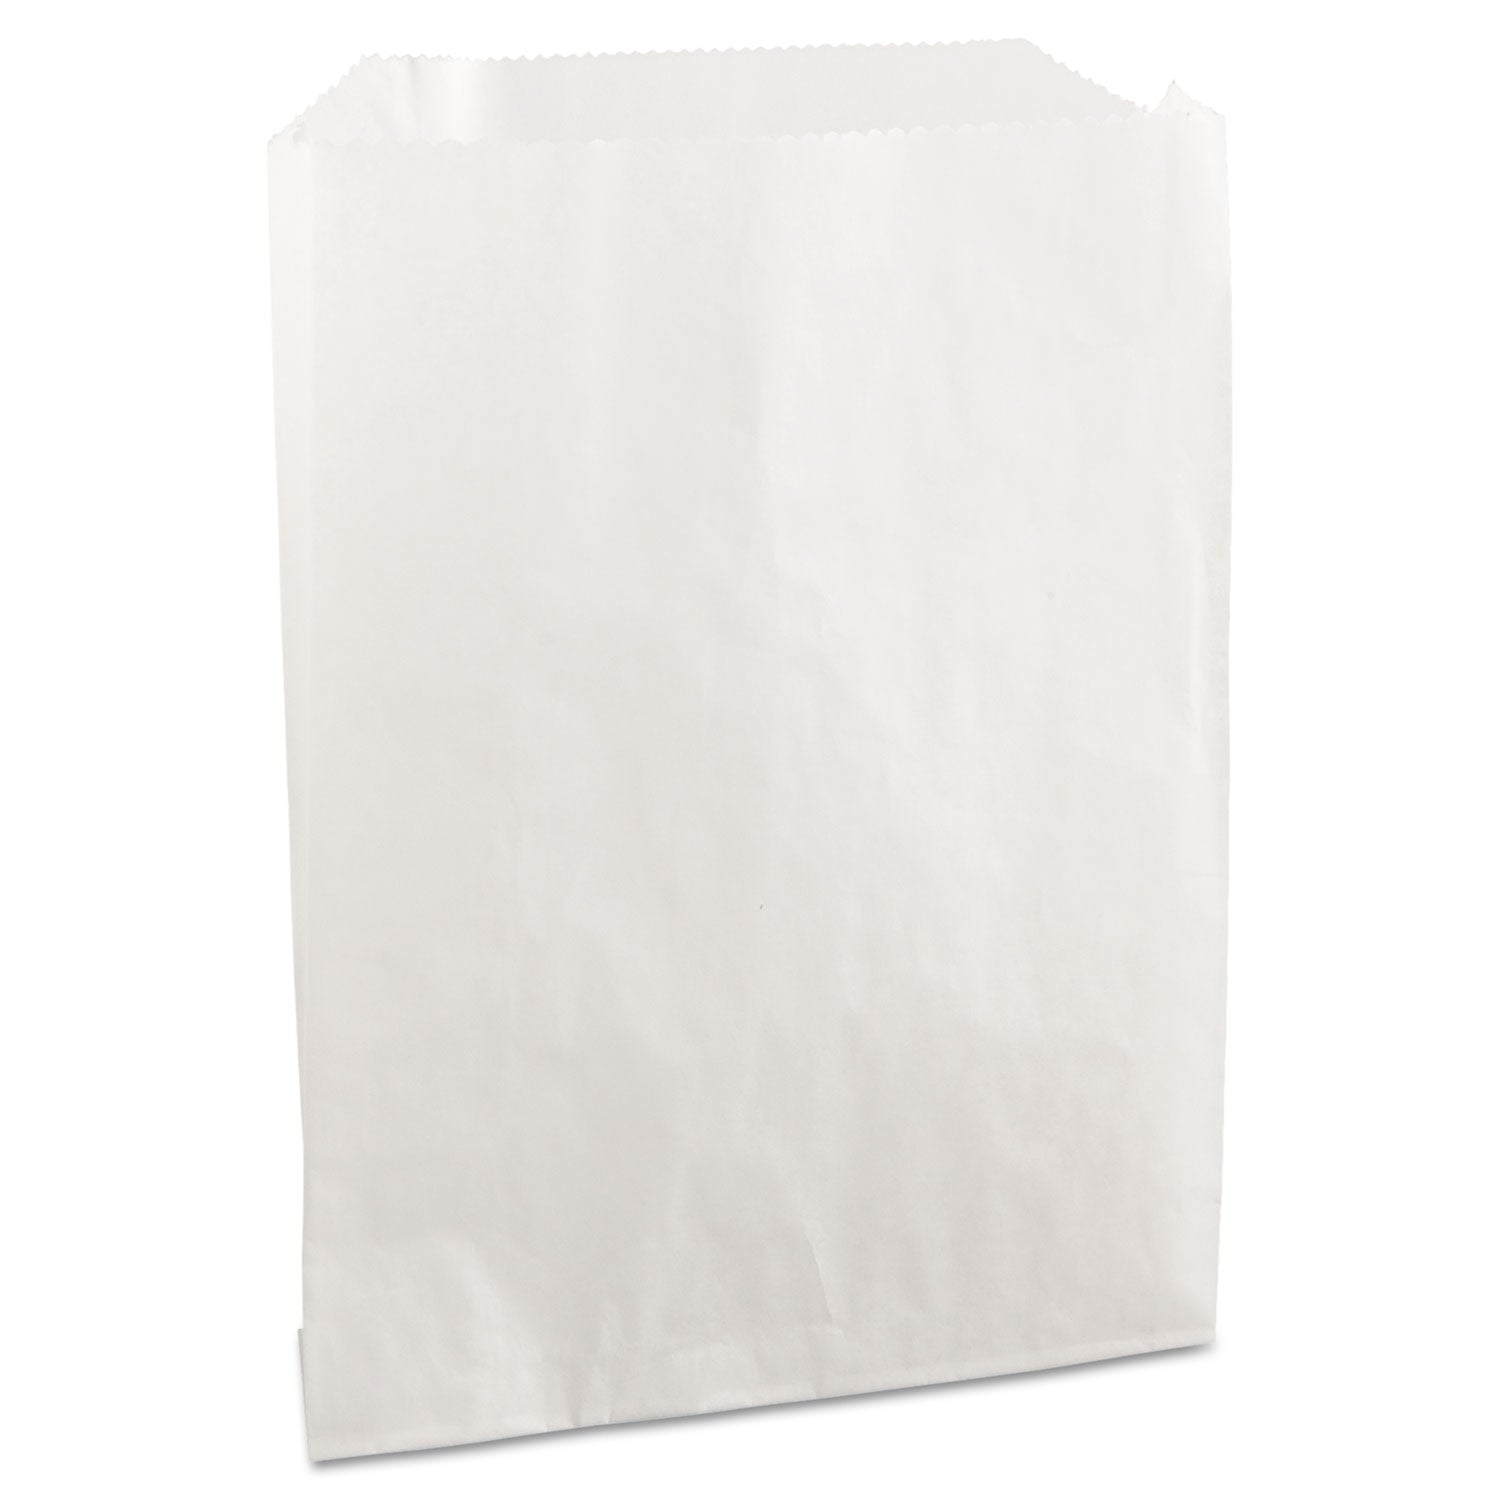 grease-resistant-single-serve-bags-6-x-725-white-2000-carton_bgc450019 - 1